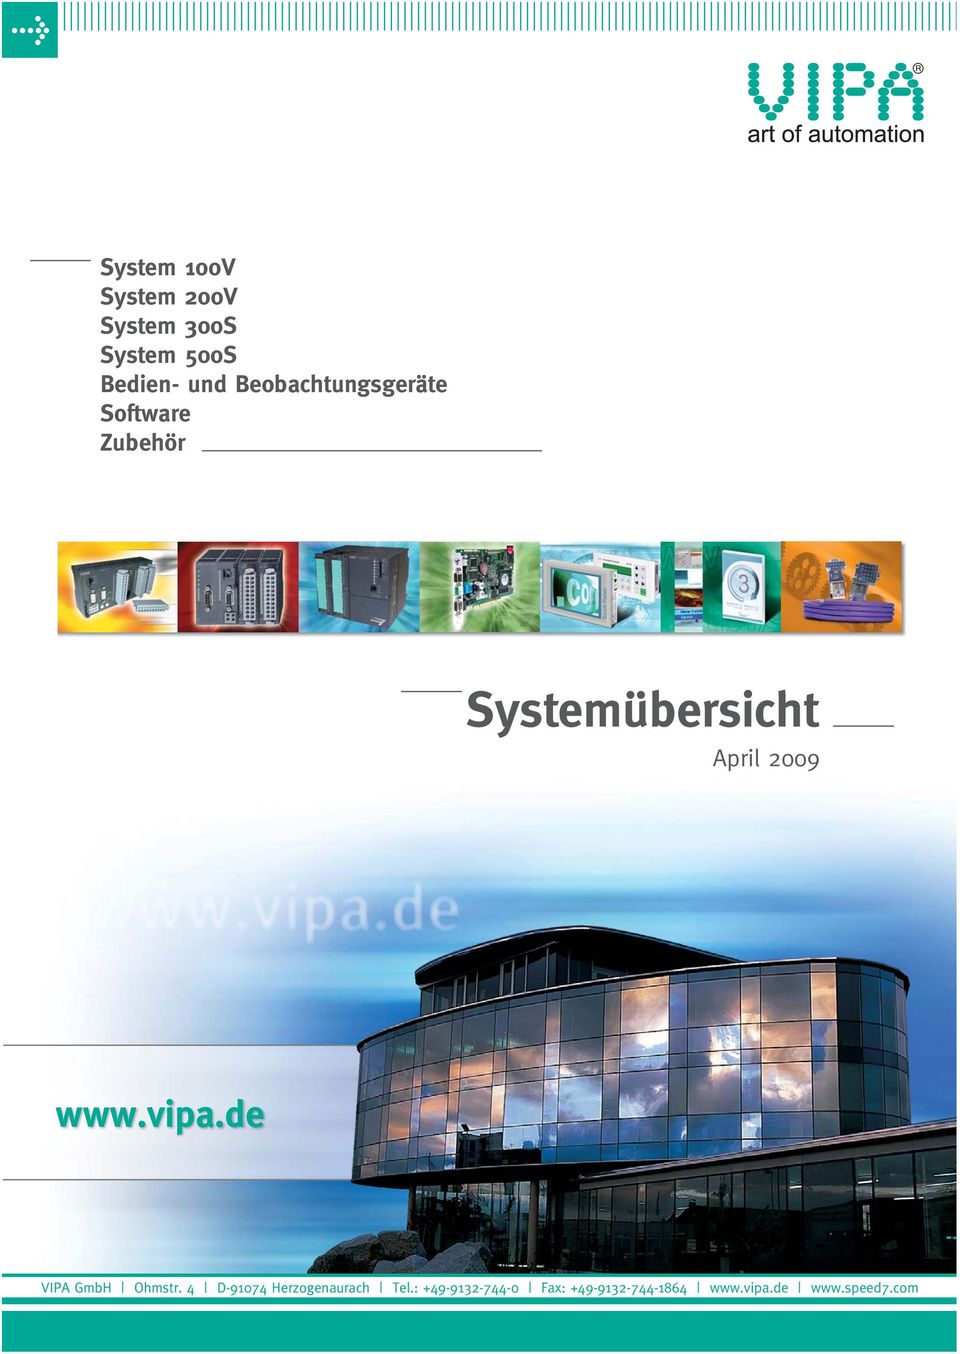 2009 www.vipa.de VIPA GmbH Ohmstr.